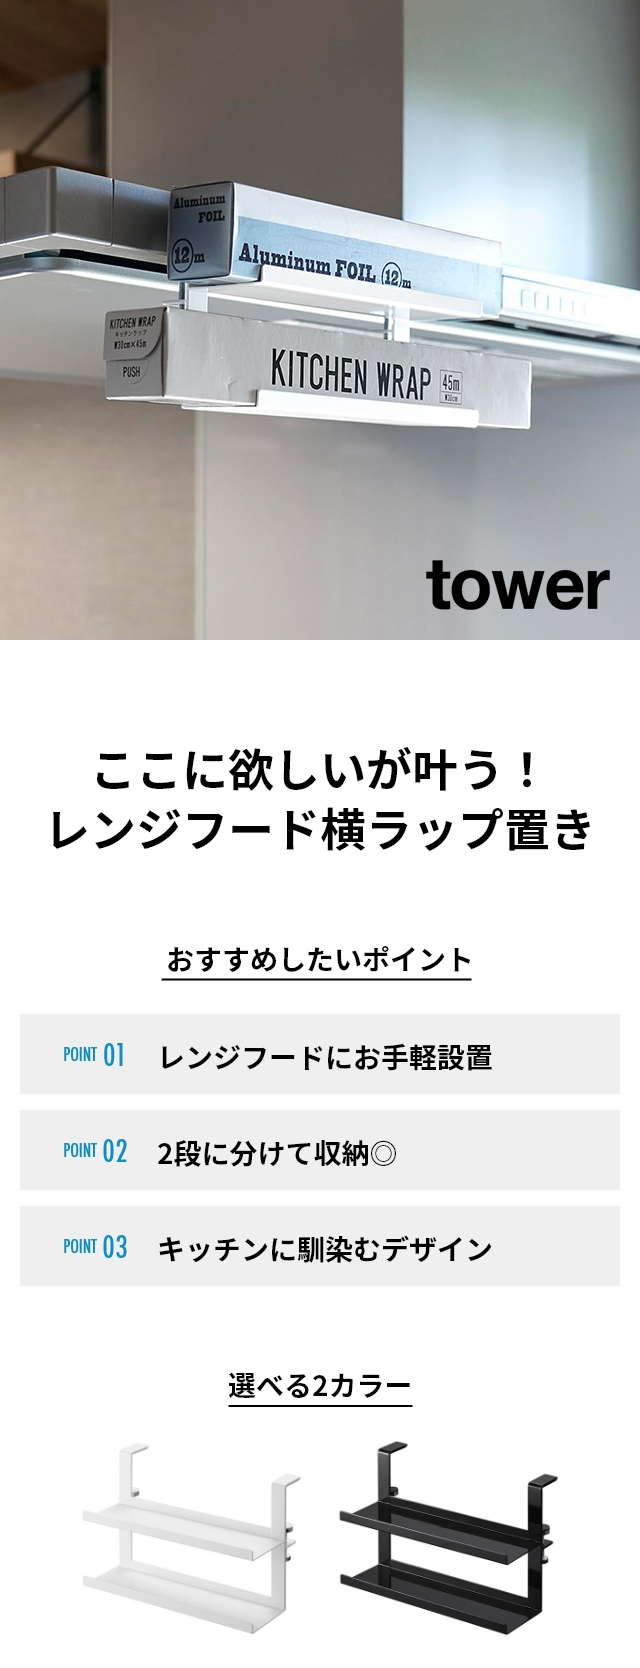 tower(タワー) レンジフード横ラップ収納